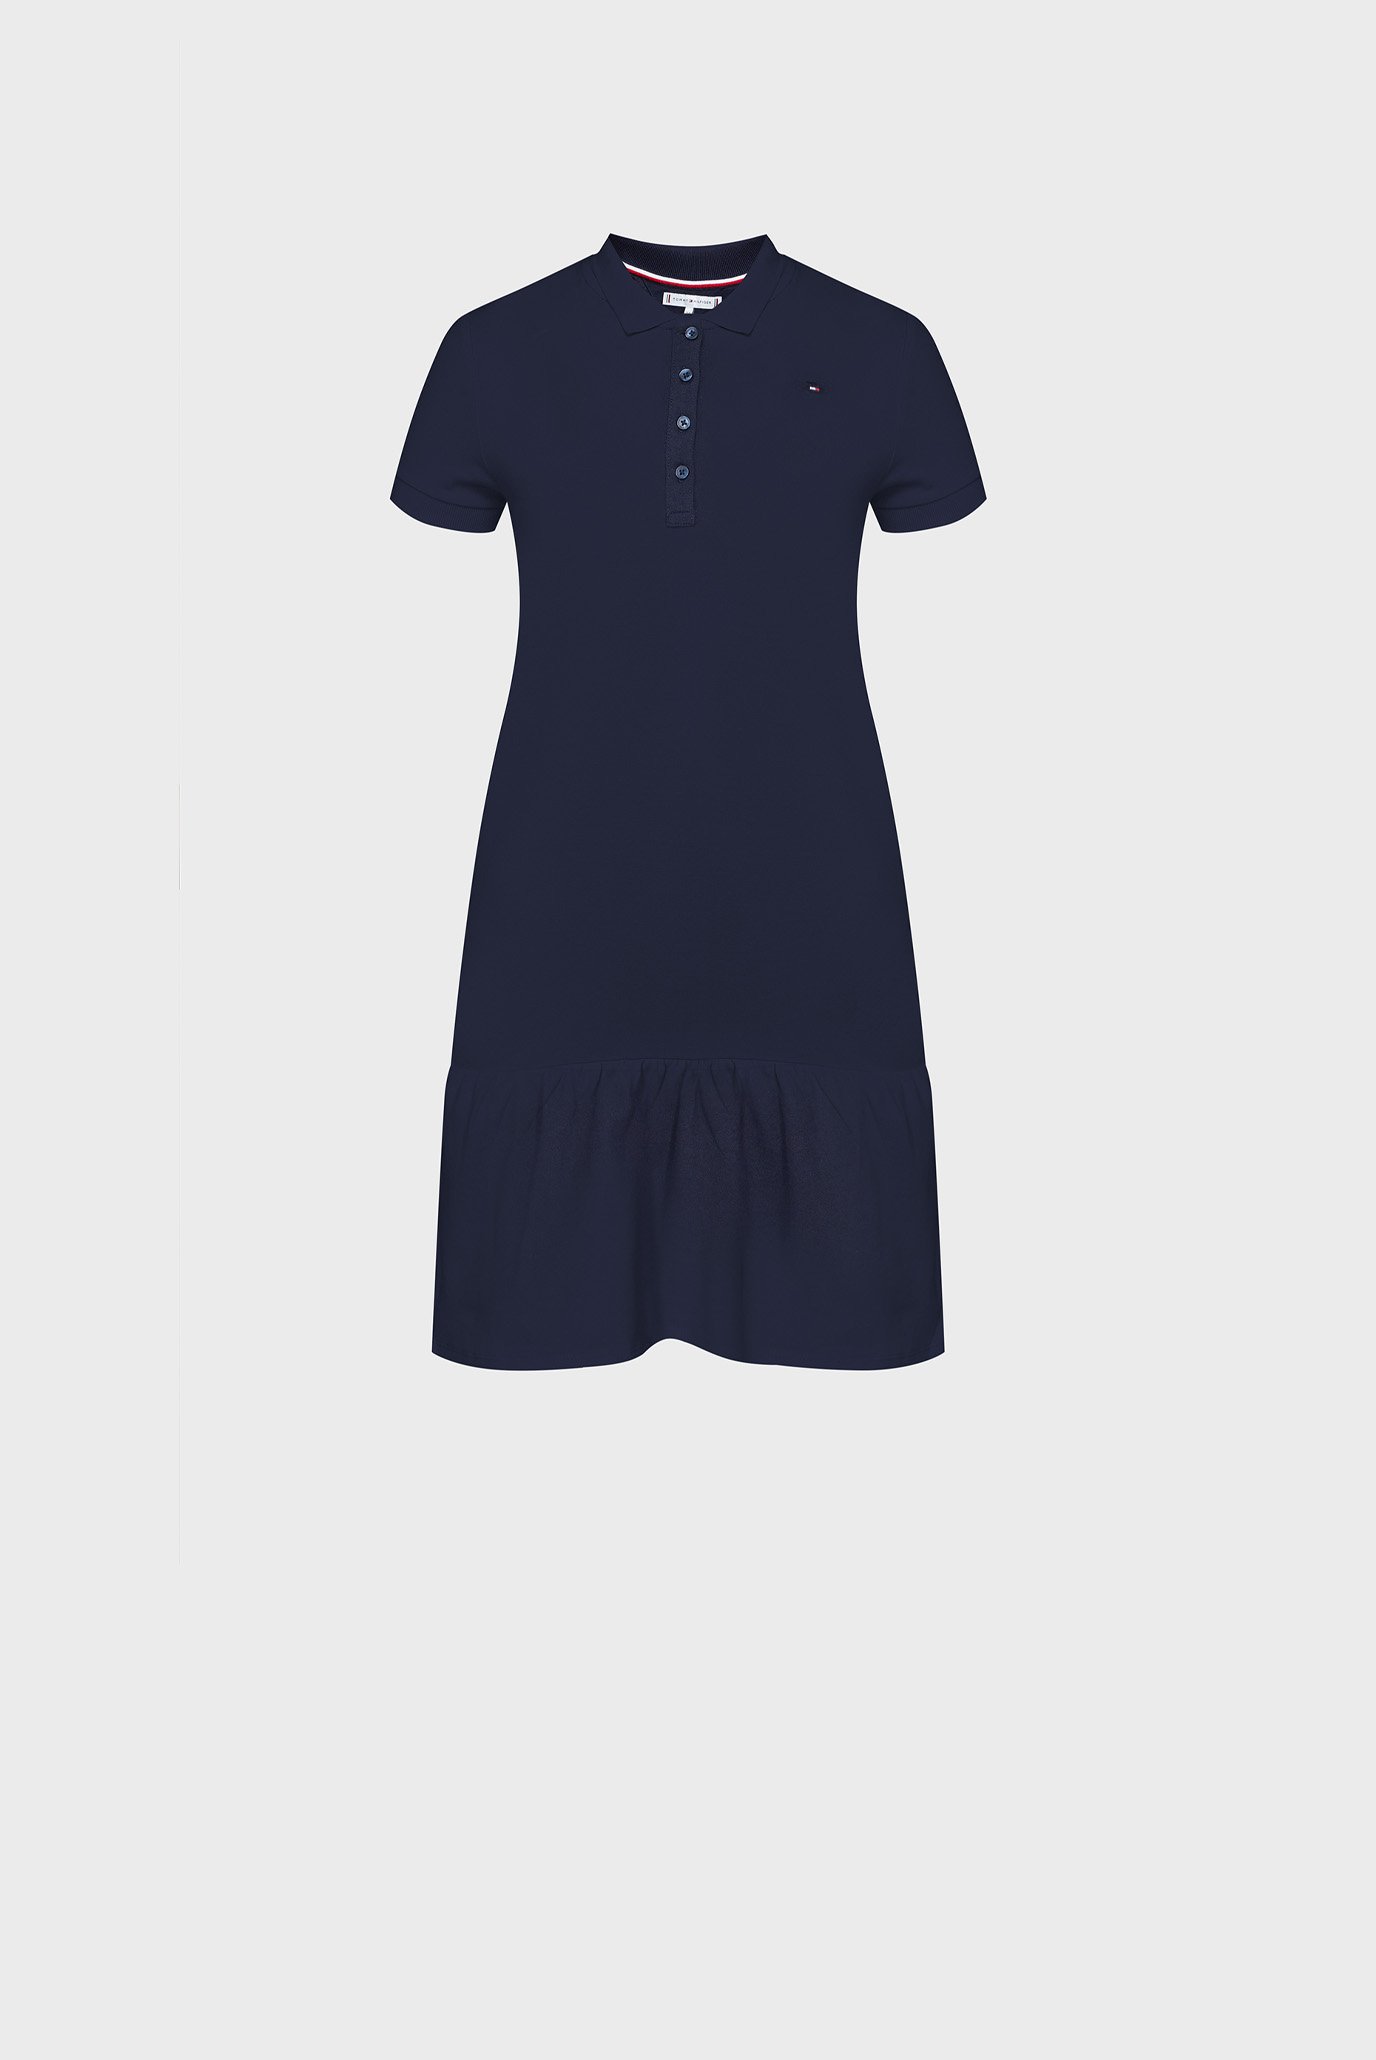 Дитяча темно-синя сукня ESSENTIAL POLO DRESS S/S 1